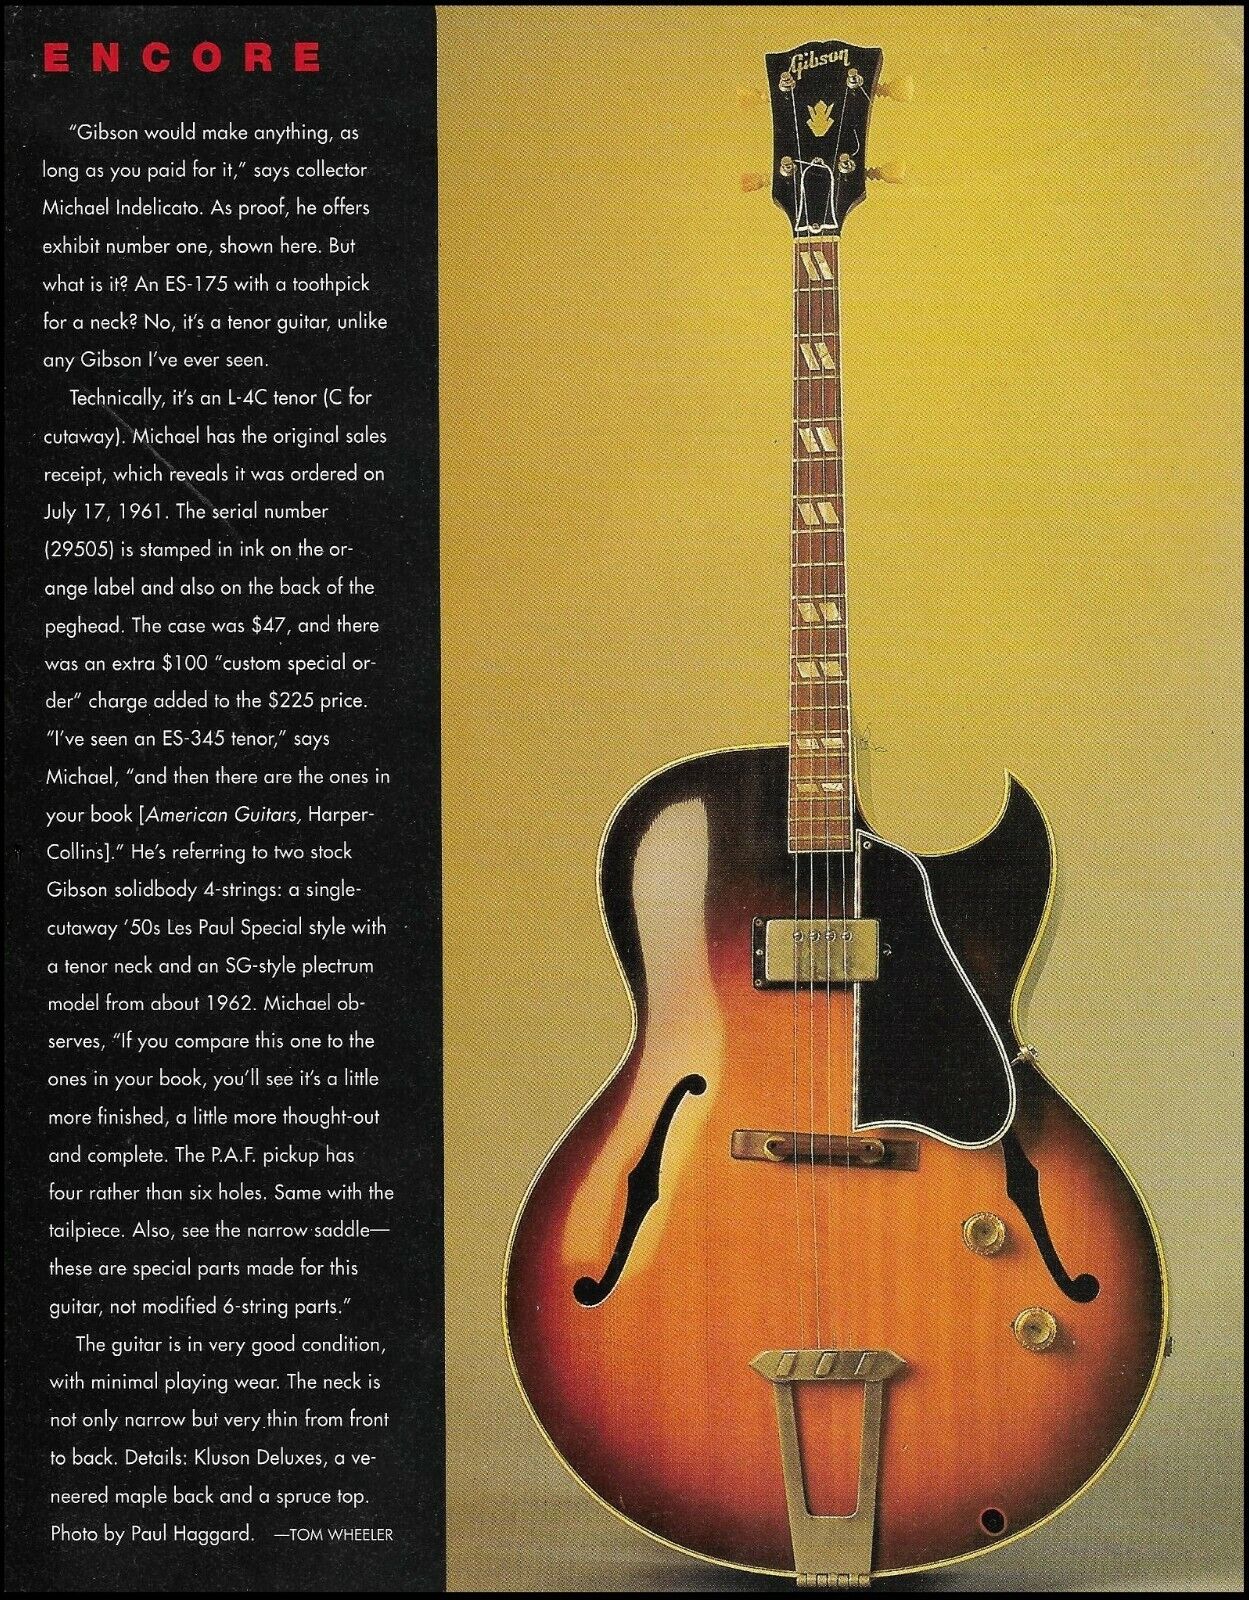 1961 Gibson L-4 cutaway tenor 1996 vintage L-4C guitar history article print